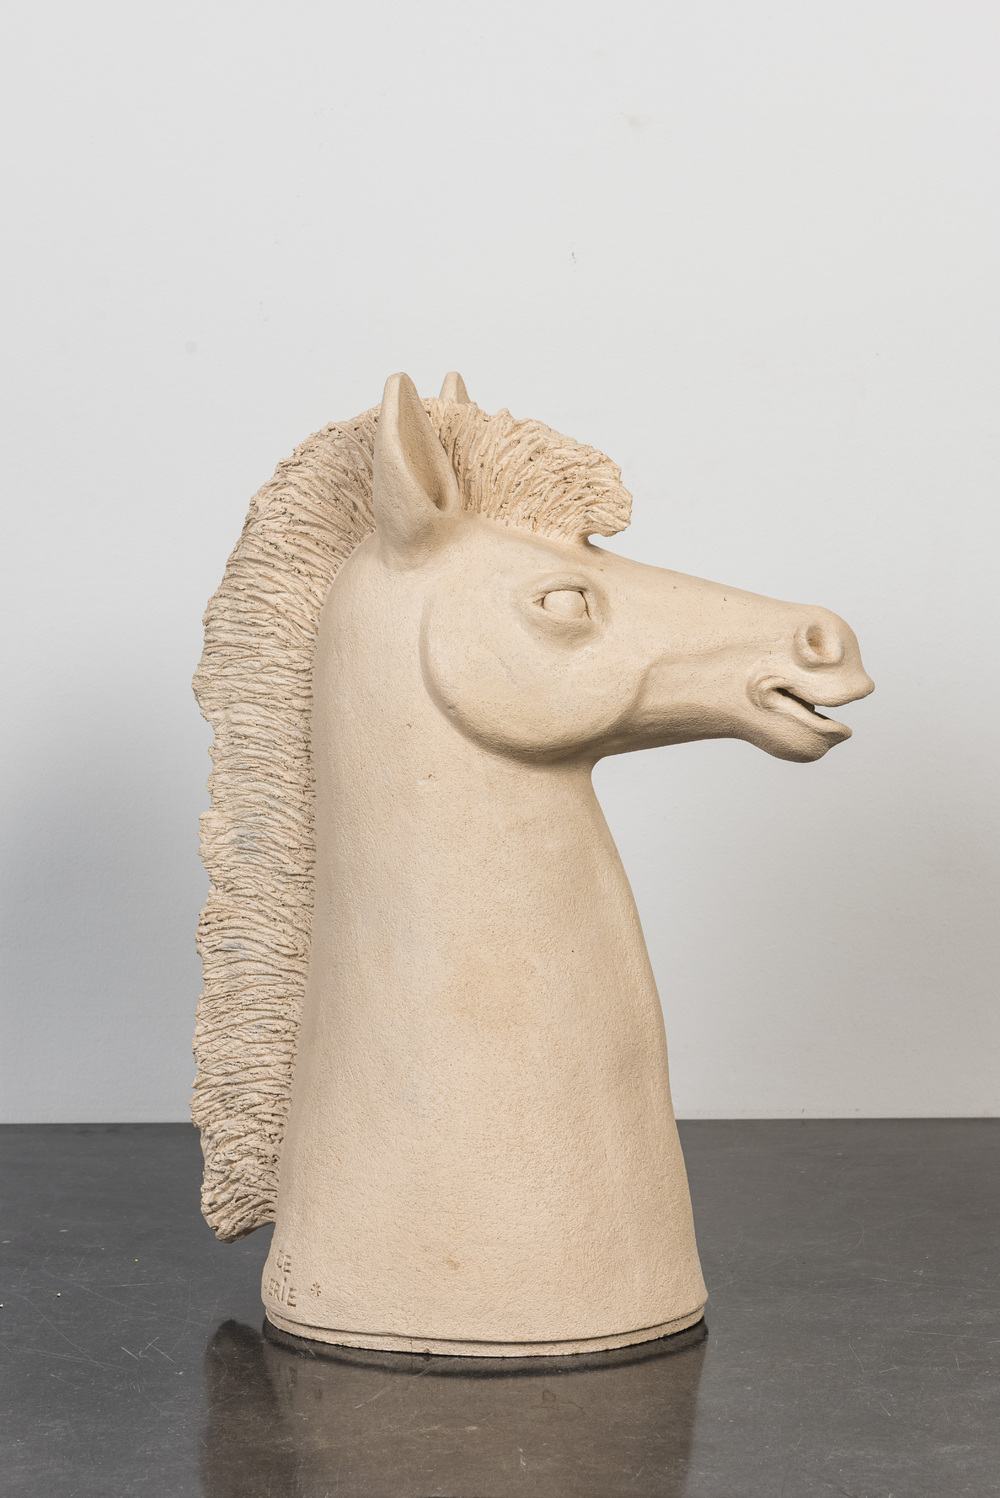 B&eacute;atrice Balguerie (20/21th C.): Head of a horse, earthenware